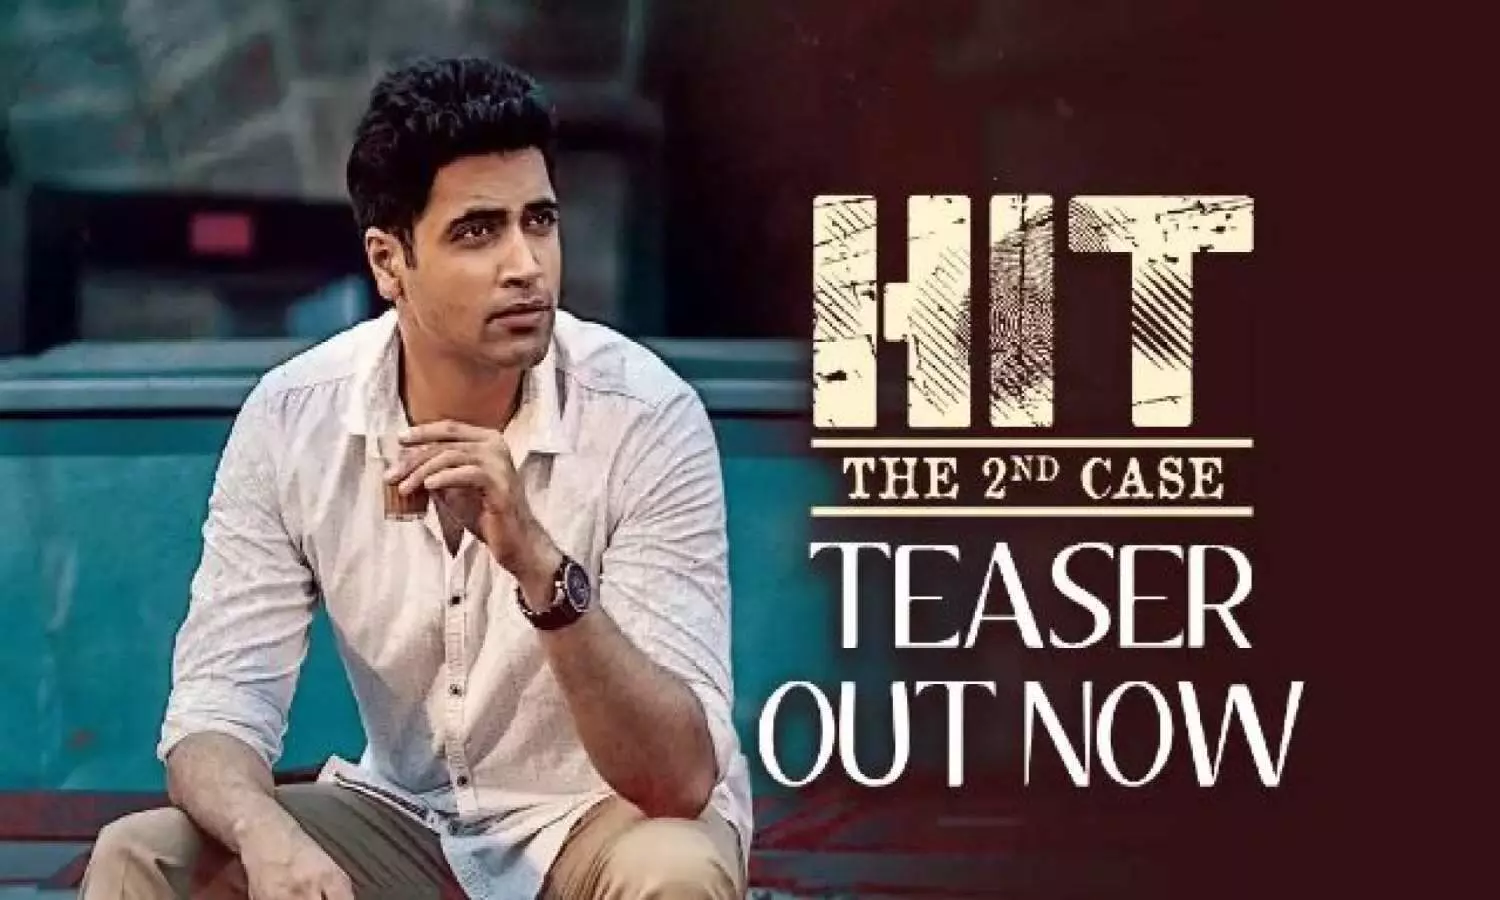 HIT 2 movie teaser: హిట్-2 టీజర్ పై యూట్యూబ్ వివాదం